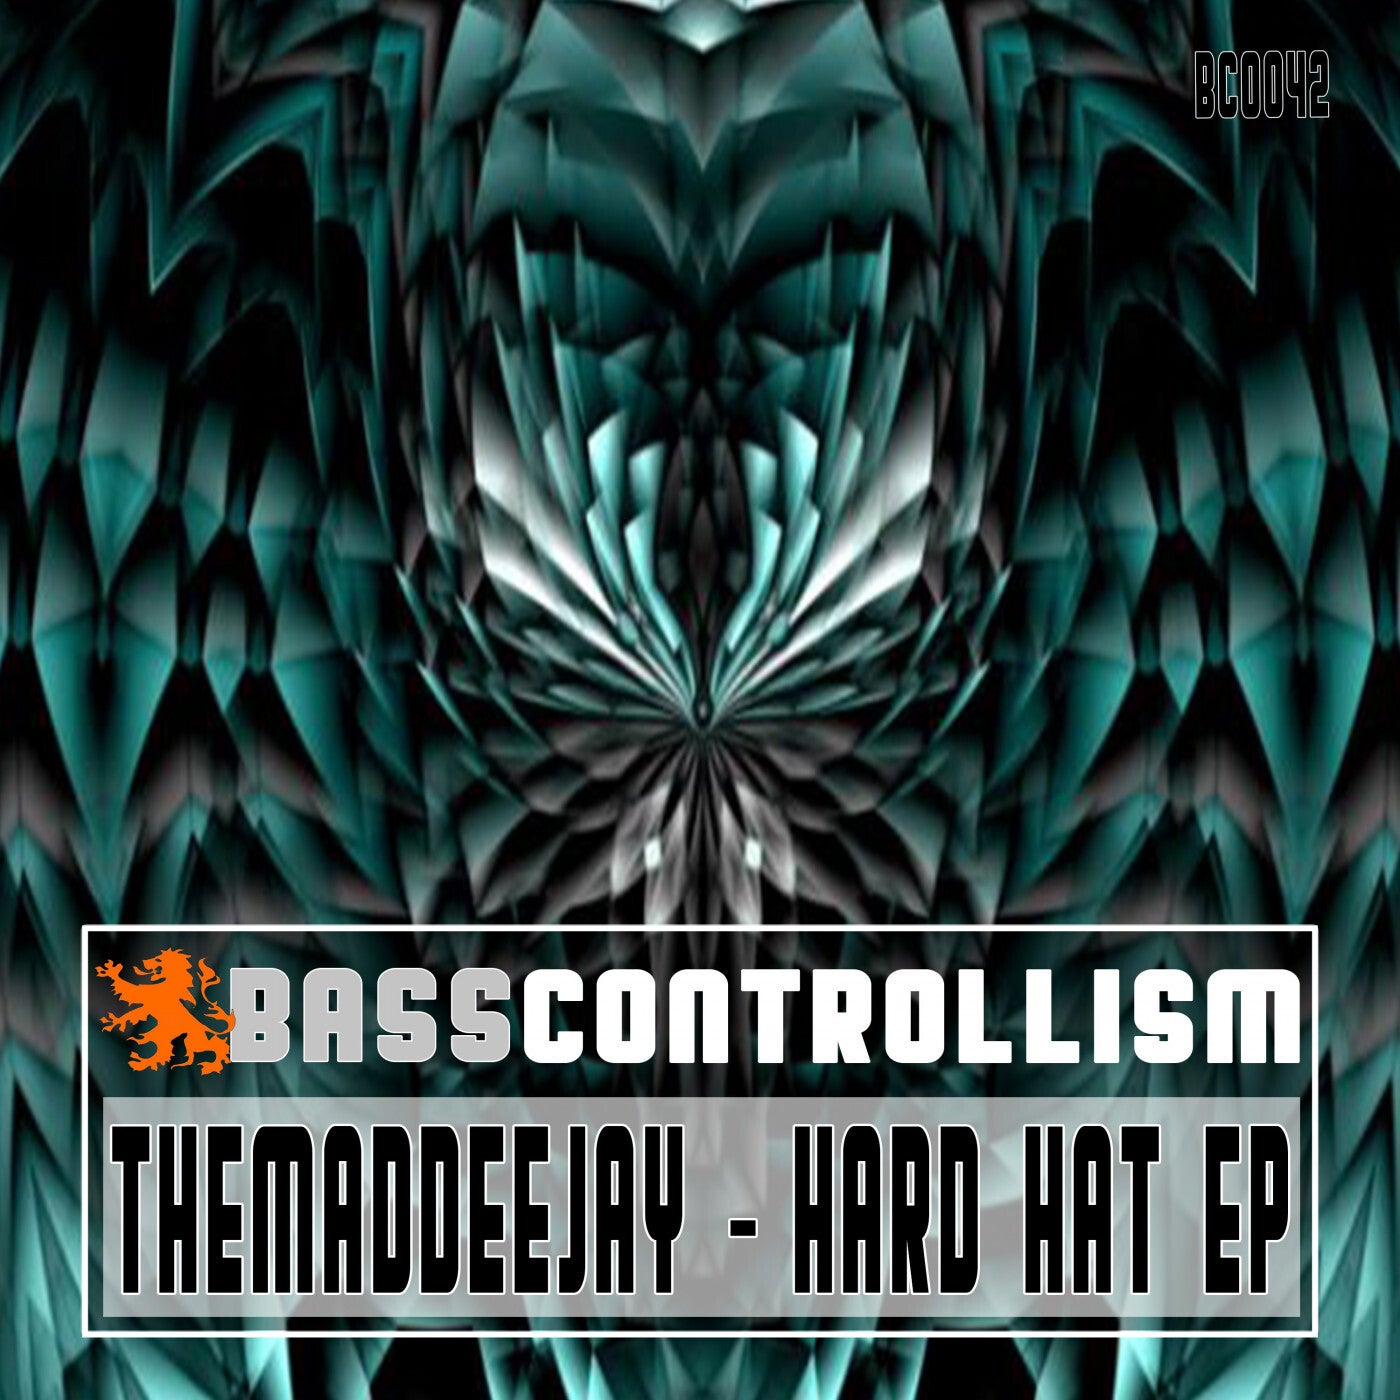 Hard Hat EP